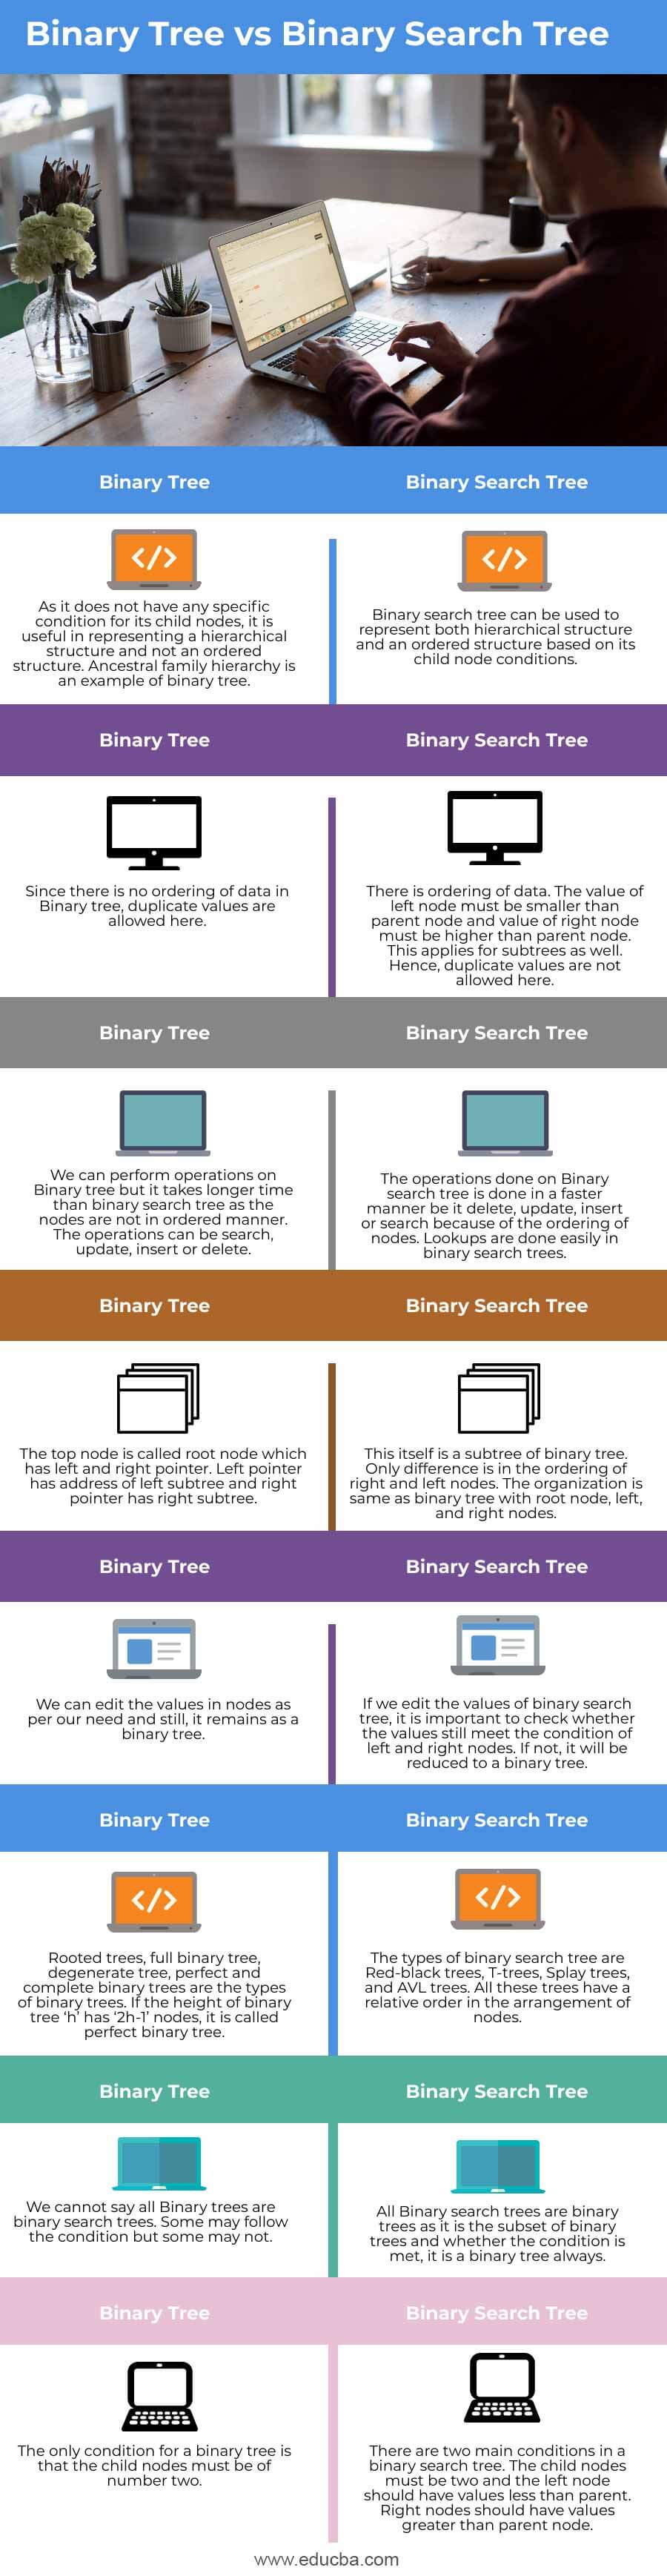 Binary-Tree-vs-Binary-Search-Tree-info